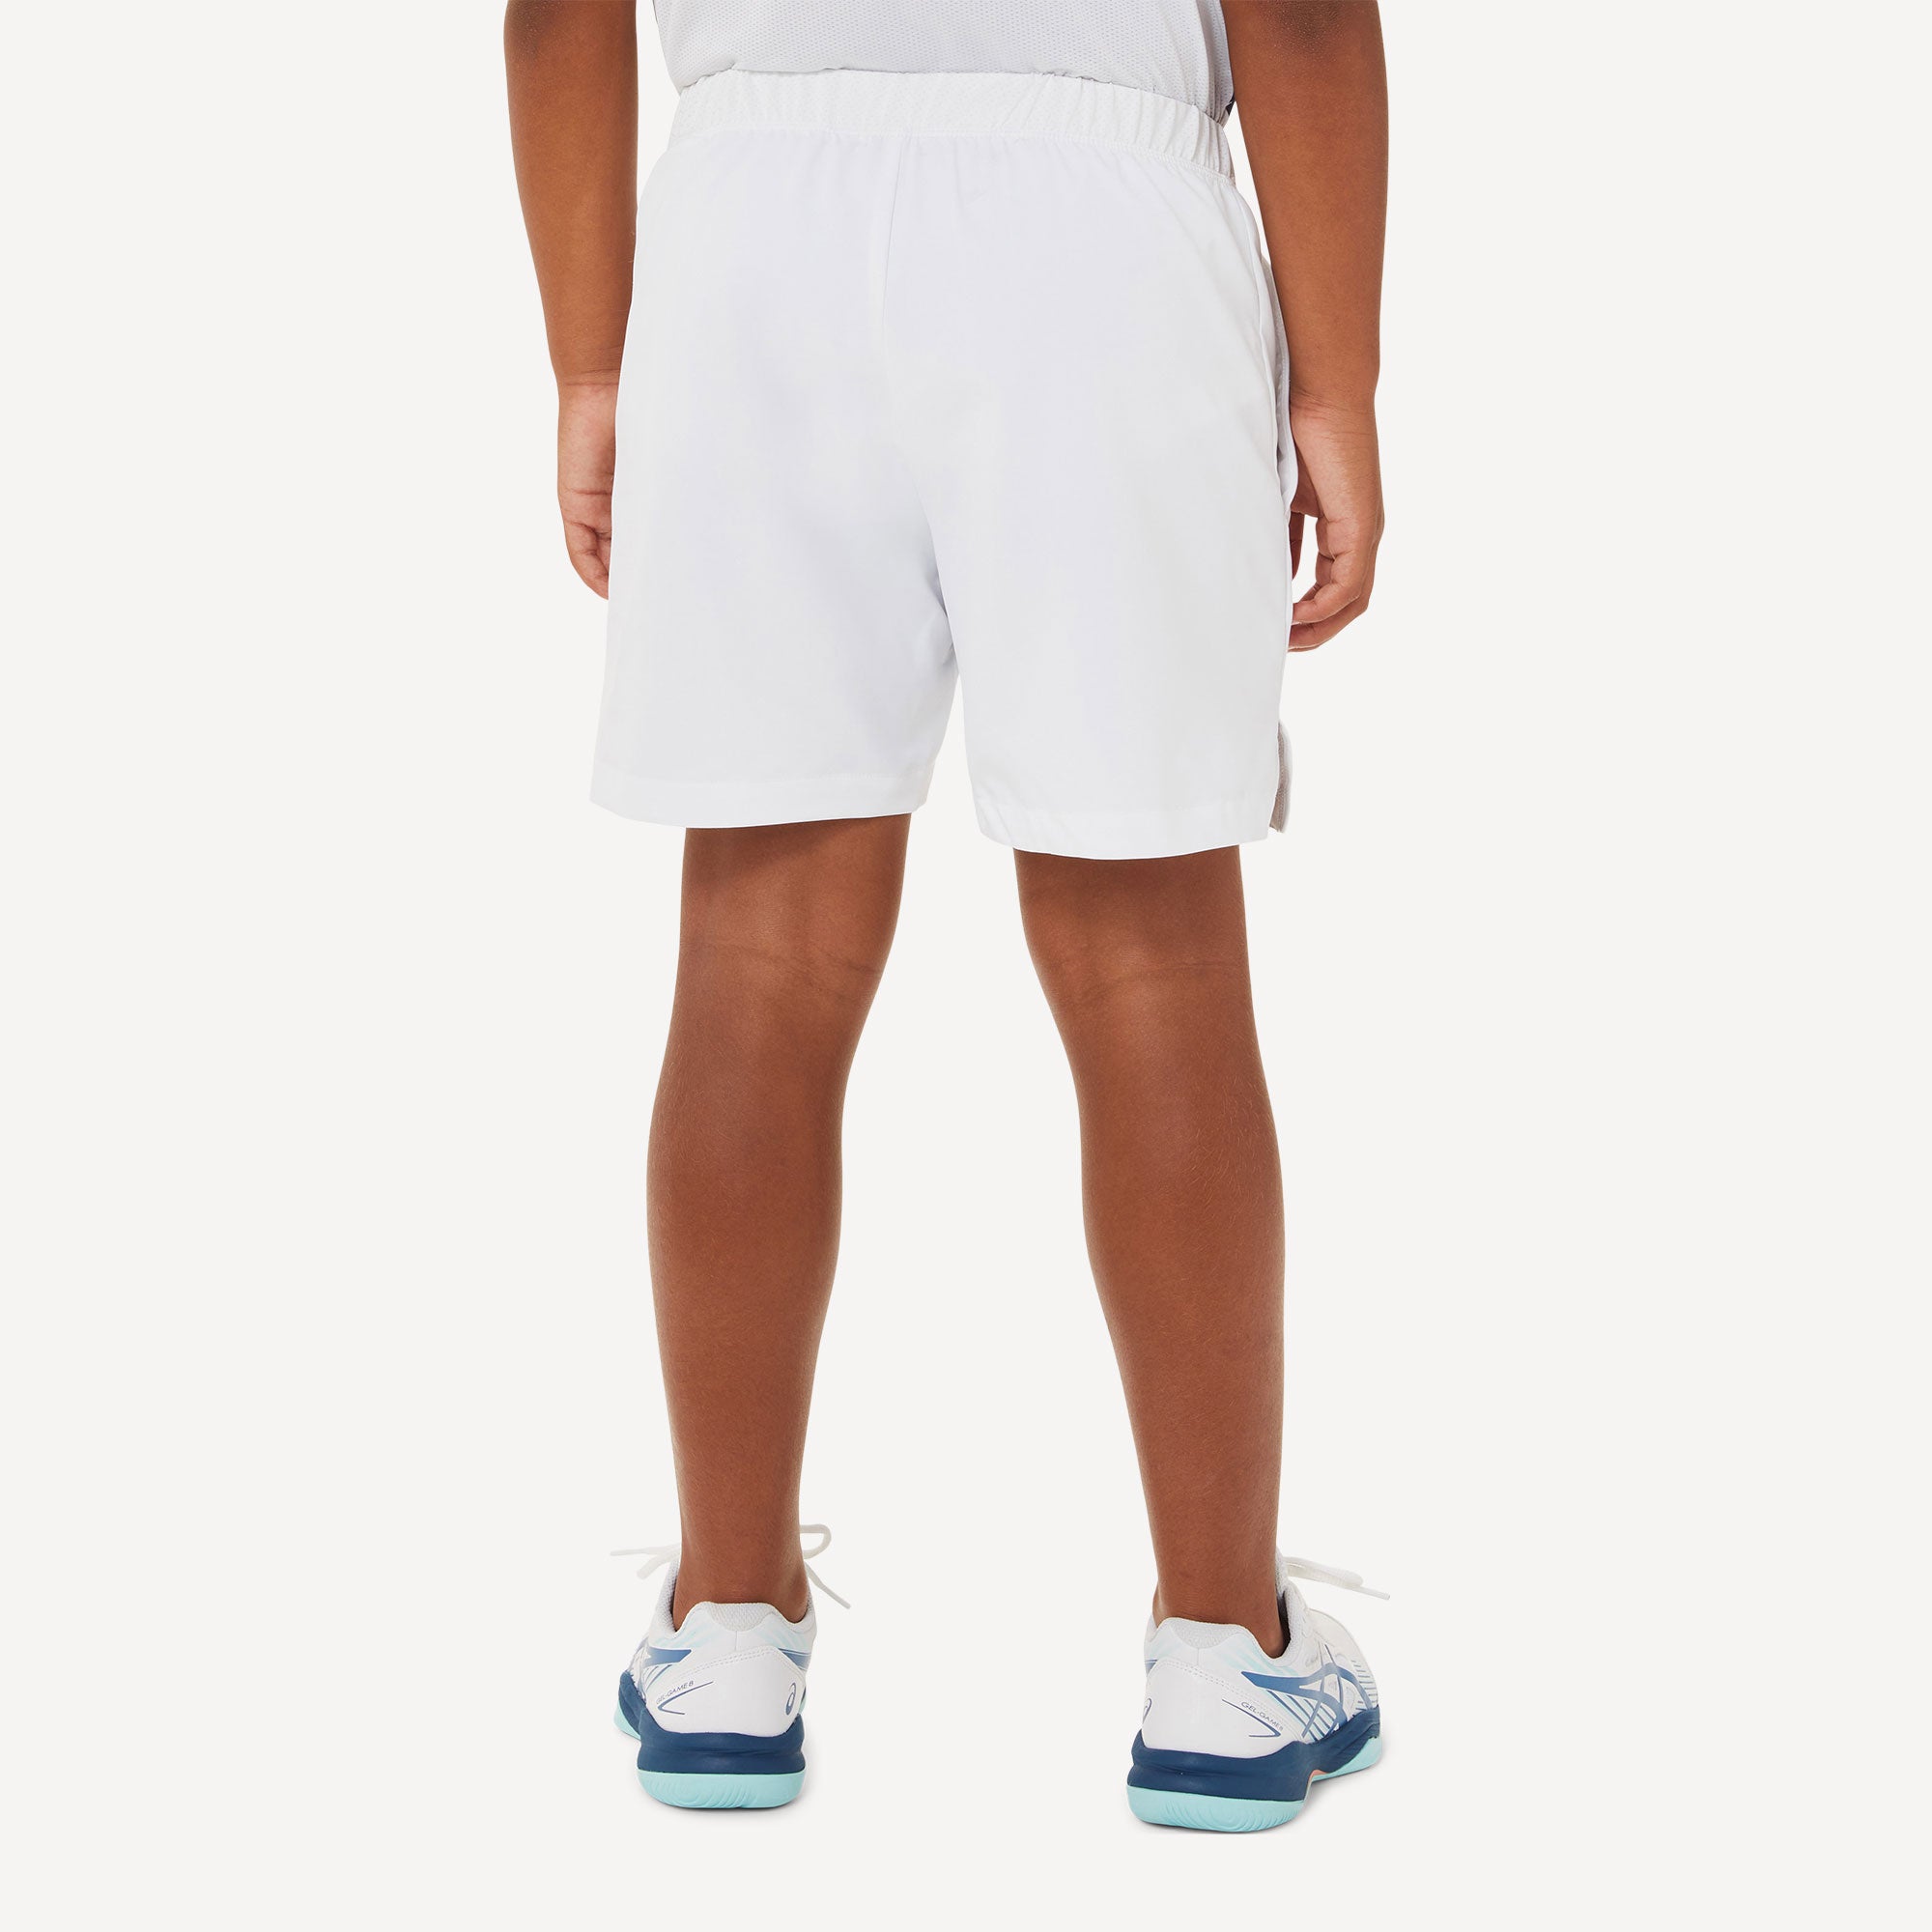 ASICS Boys' Tennis Shorts White (2)